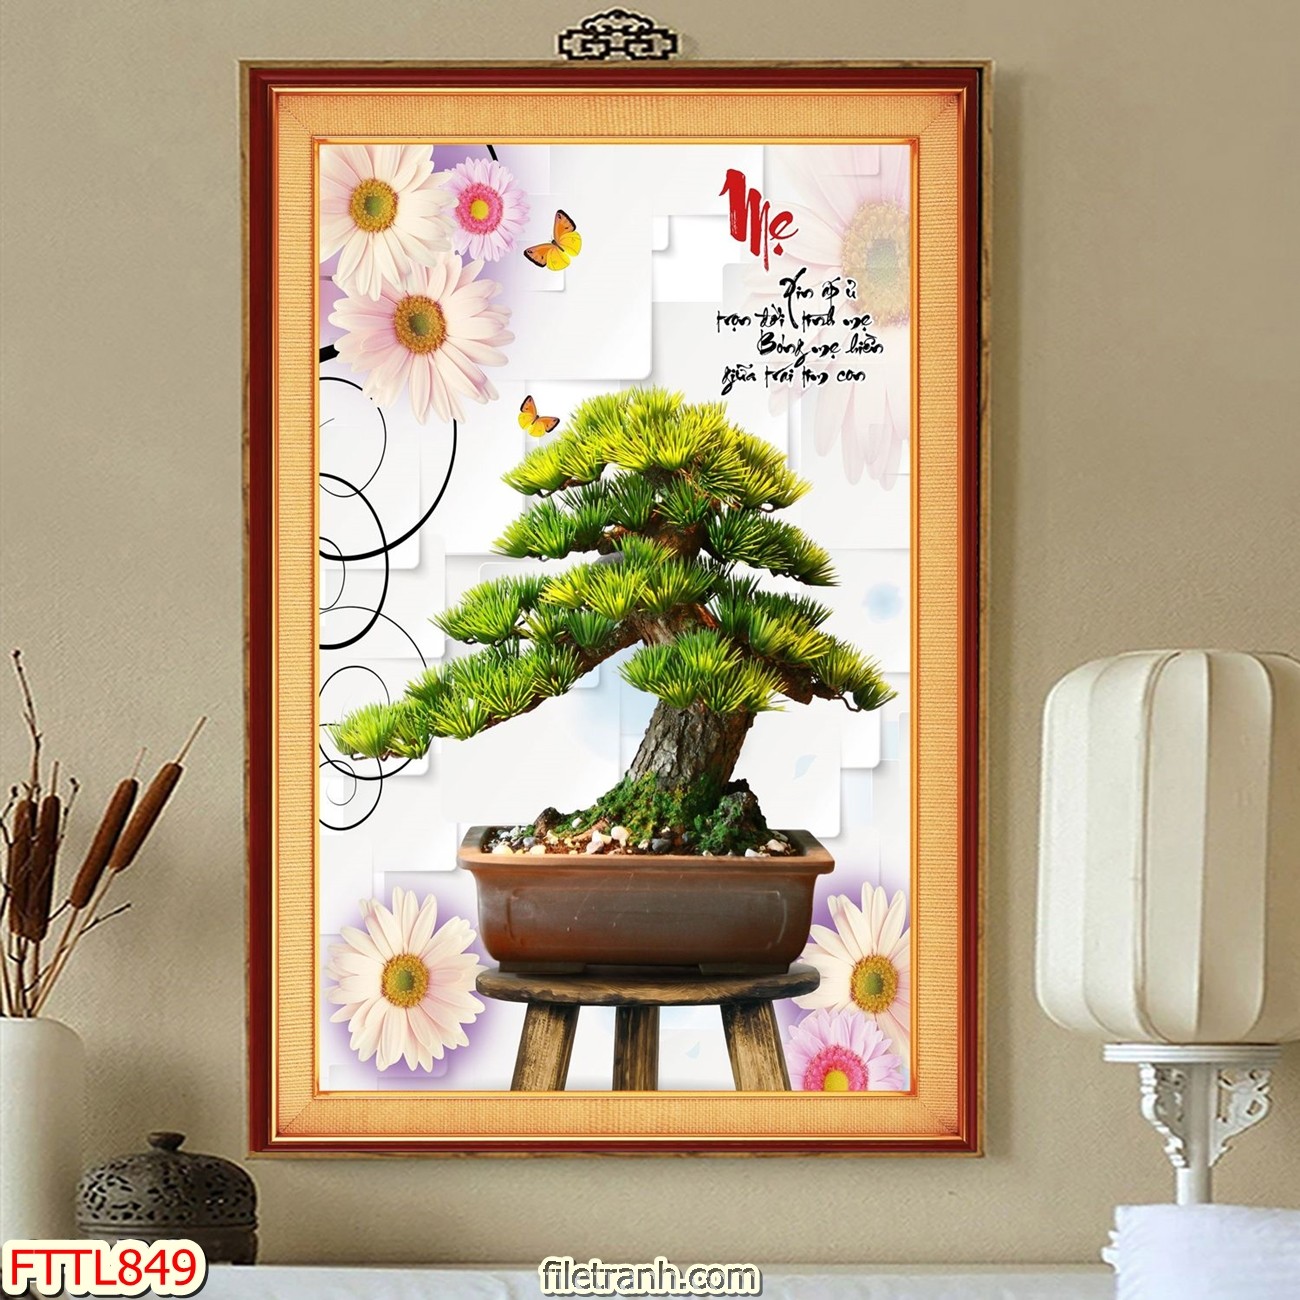 https://filetranh.com/file-tranh-chau-mai-bonsai/file-tranh-chau-mai-bonsai-fttl849.html